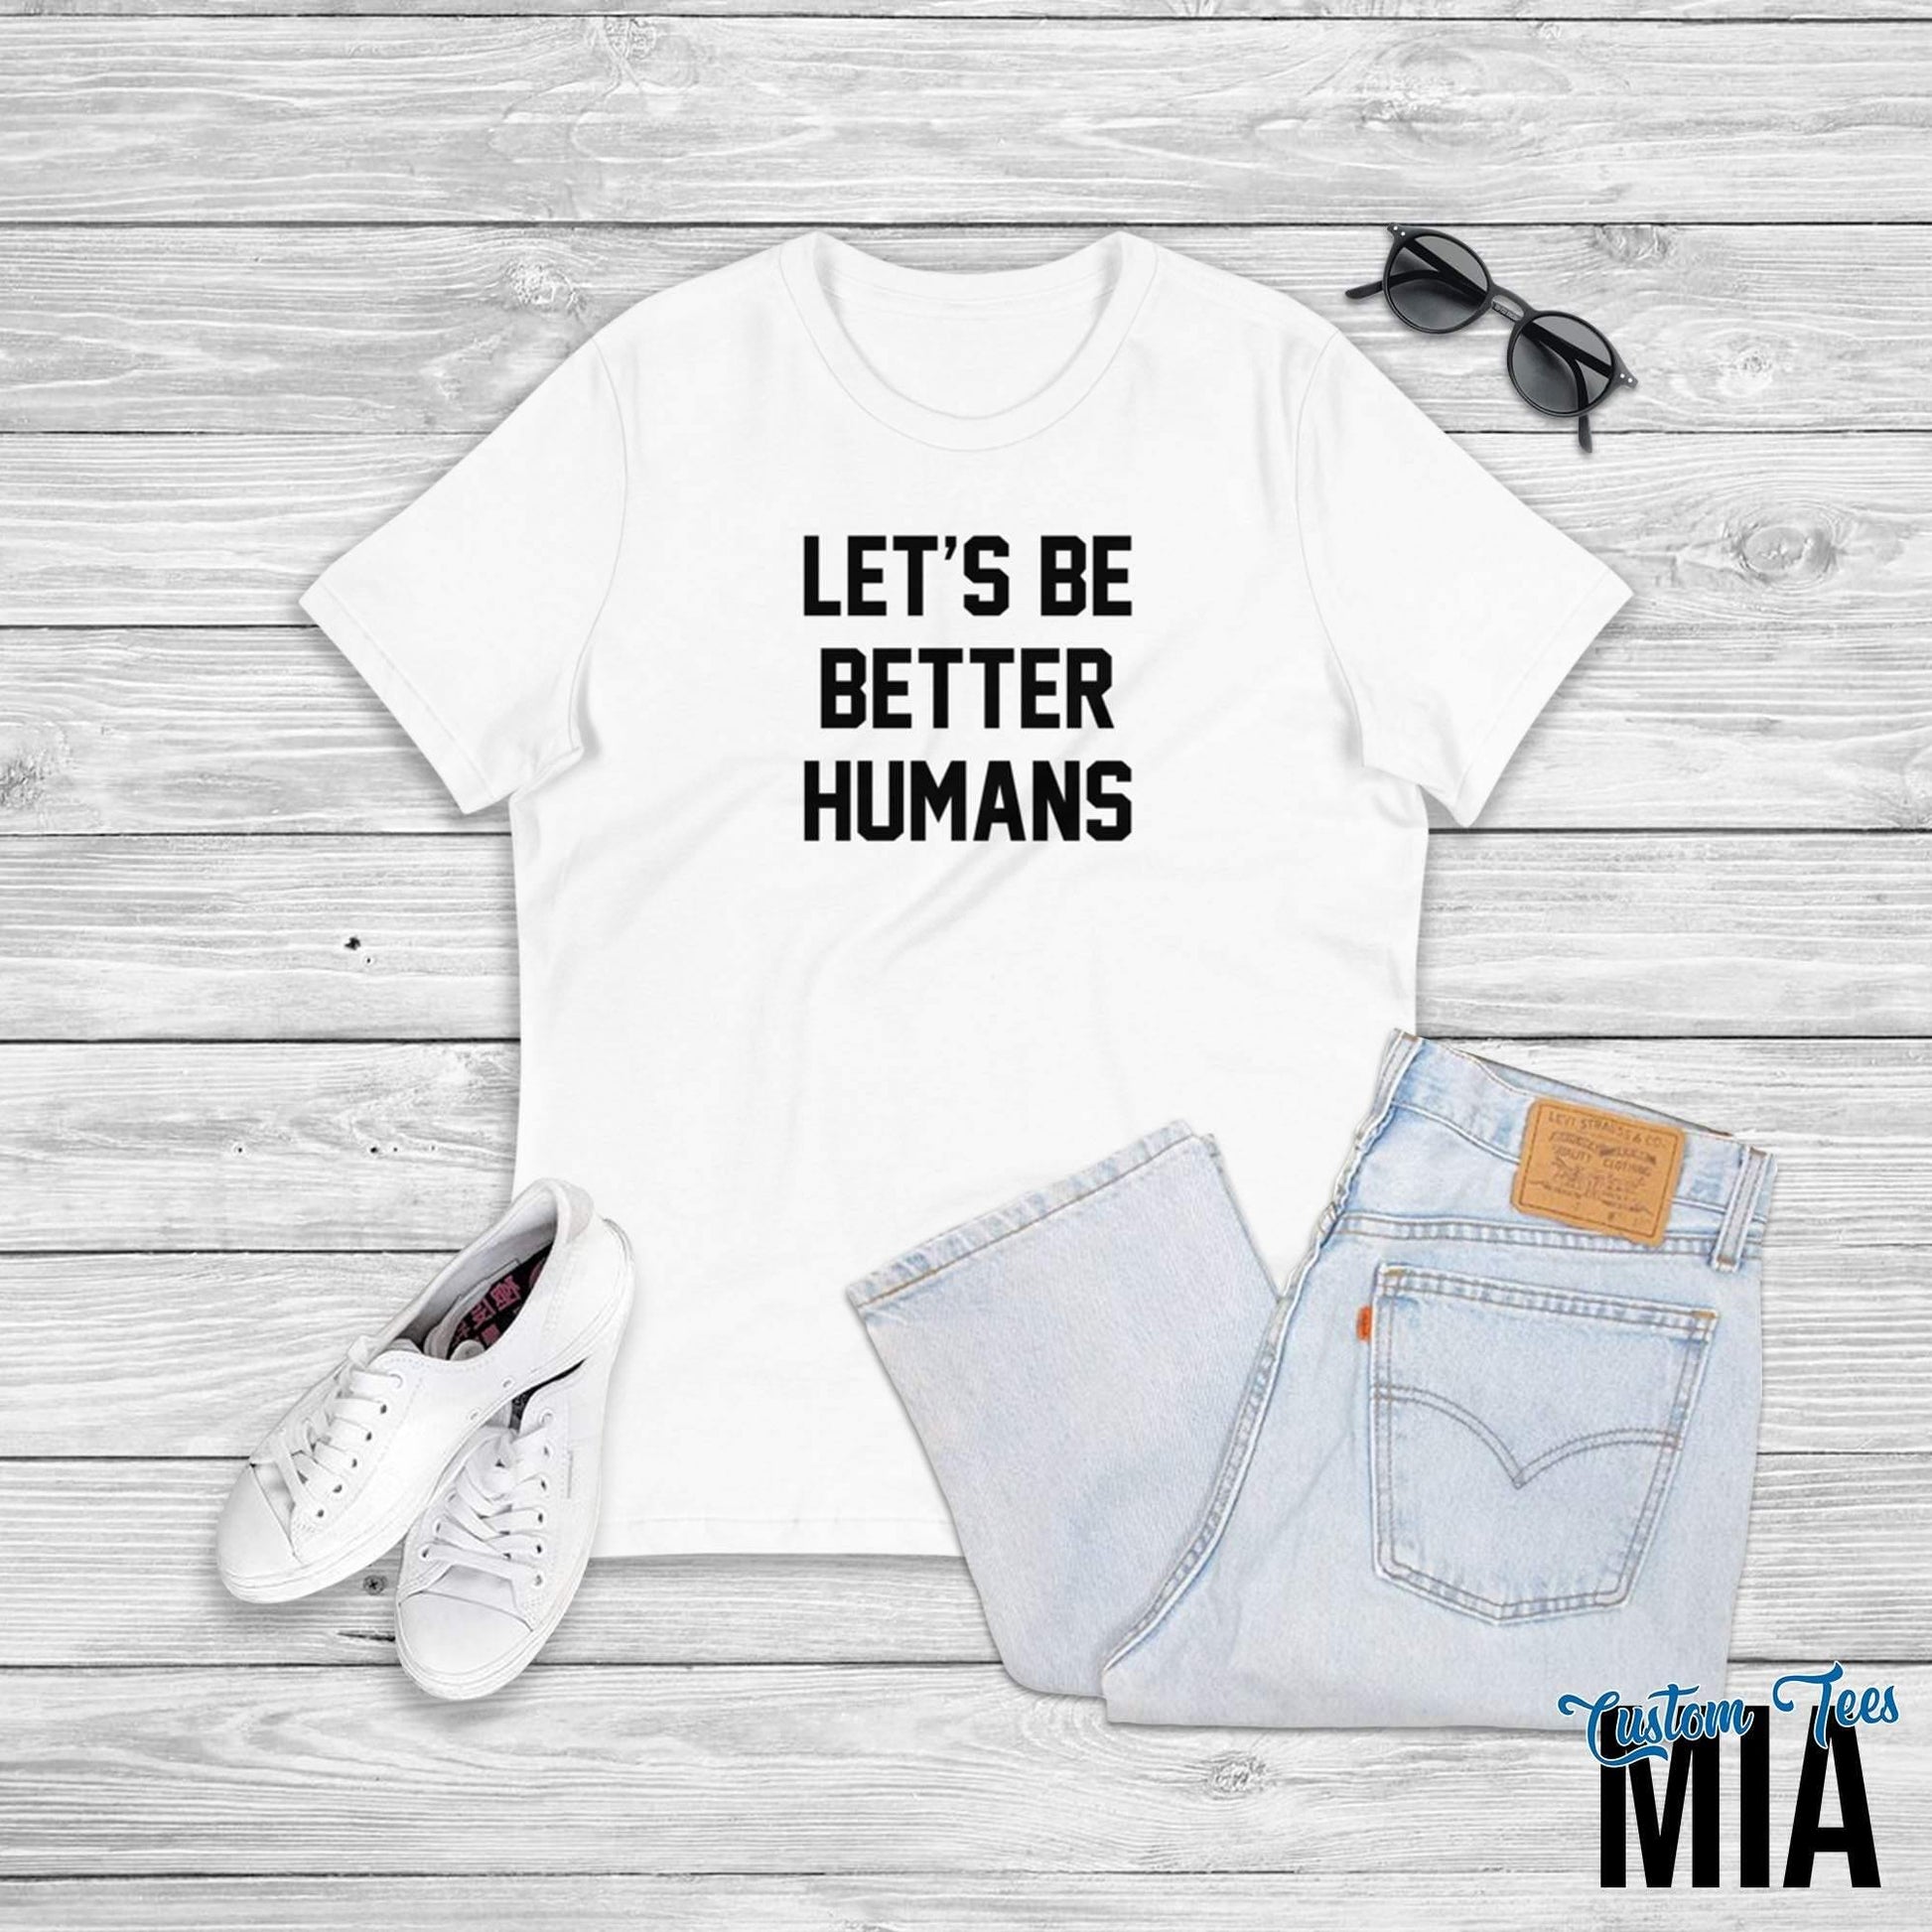 Let's Be Better Humans Shirt - Custom Tees MIA